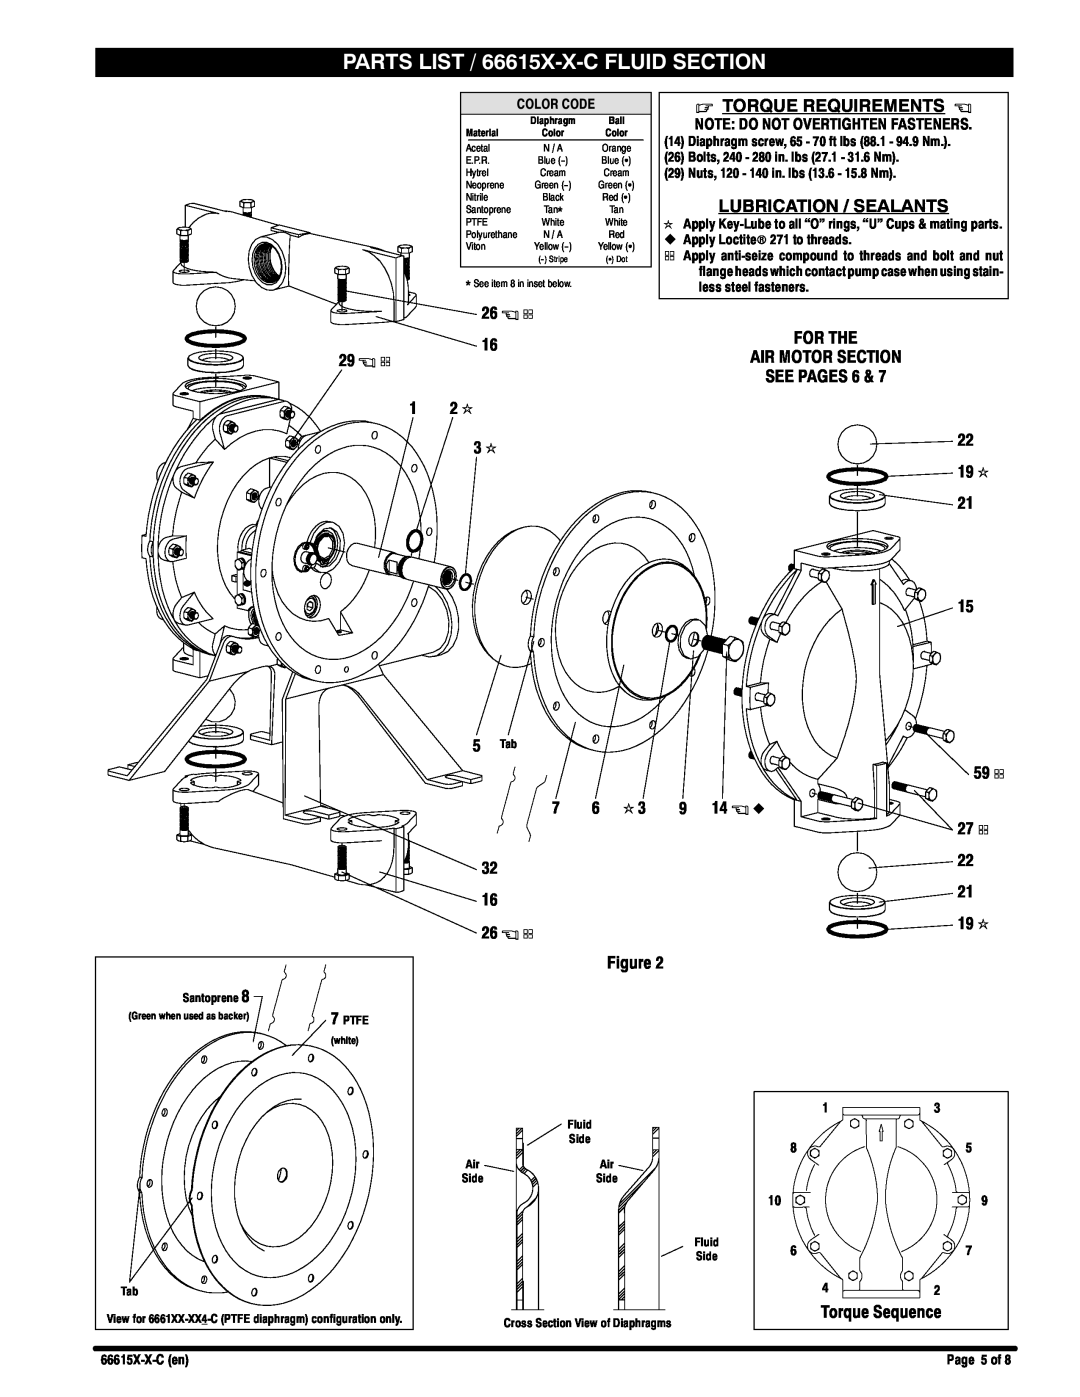 Ingersoll-Rand PARTS LIST / 66615X-X-C FLUID SECTION, Torque Requirements, Lubrication / Sealants, 29 , U, 26 , U, 19 k 